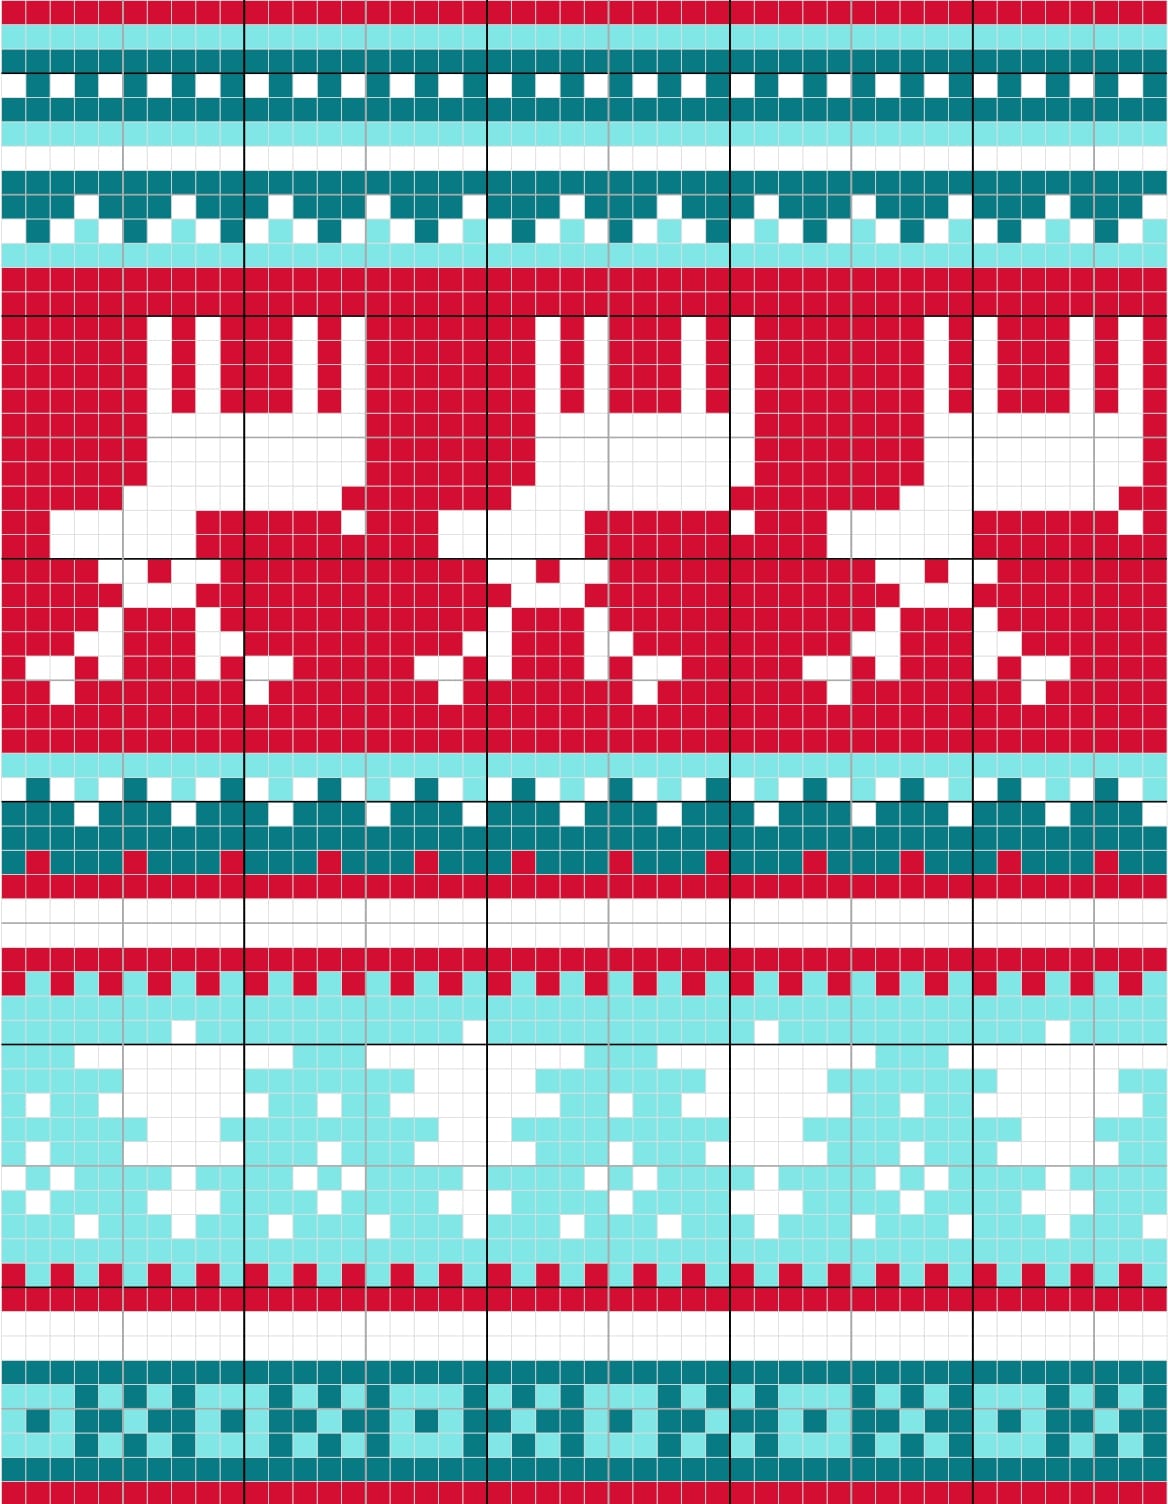 Free Printable Christmas Knitting Patterns_51936